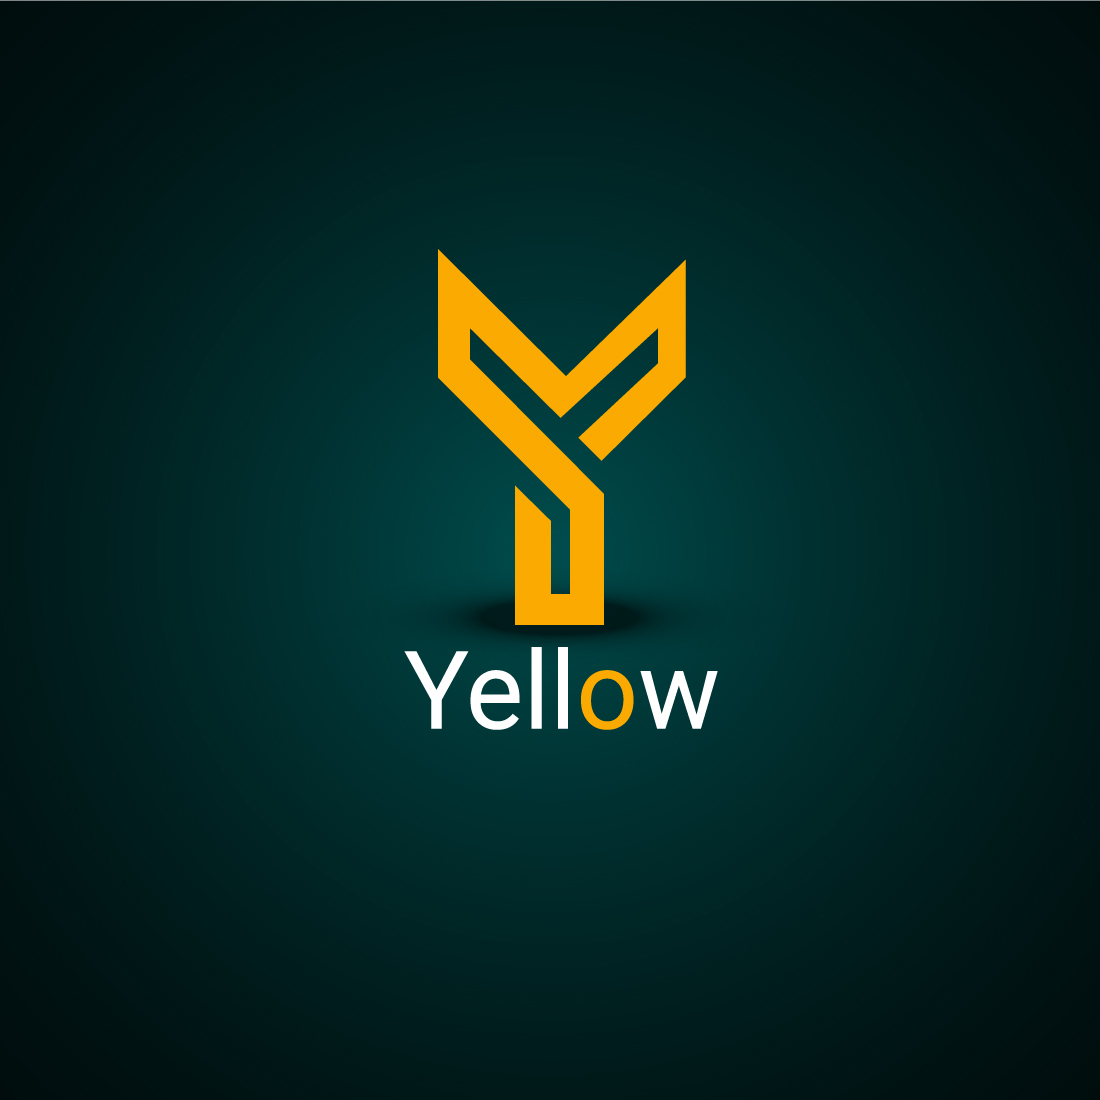 Yellow Logo cover image.